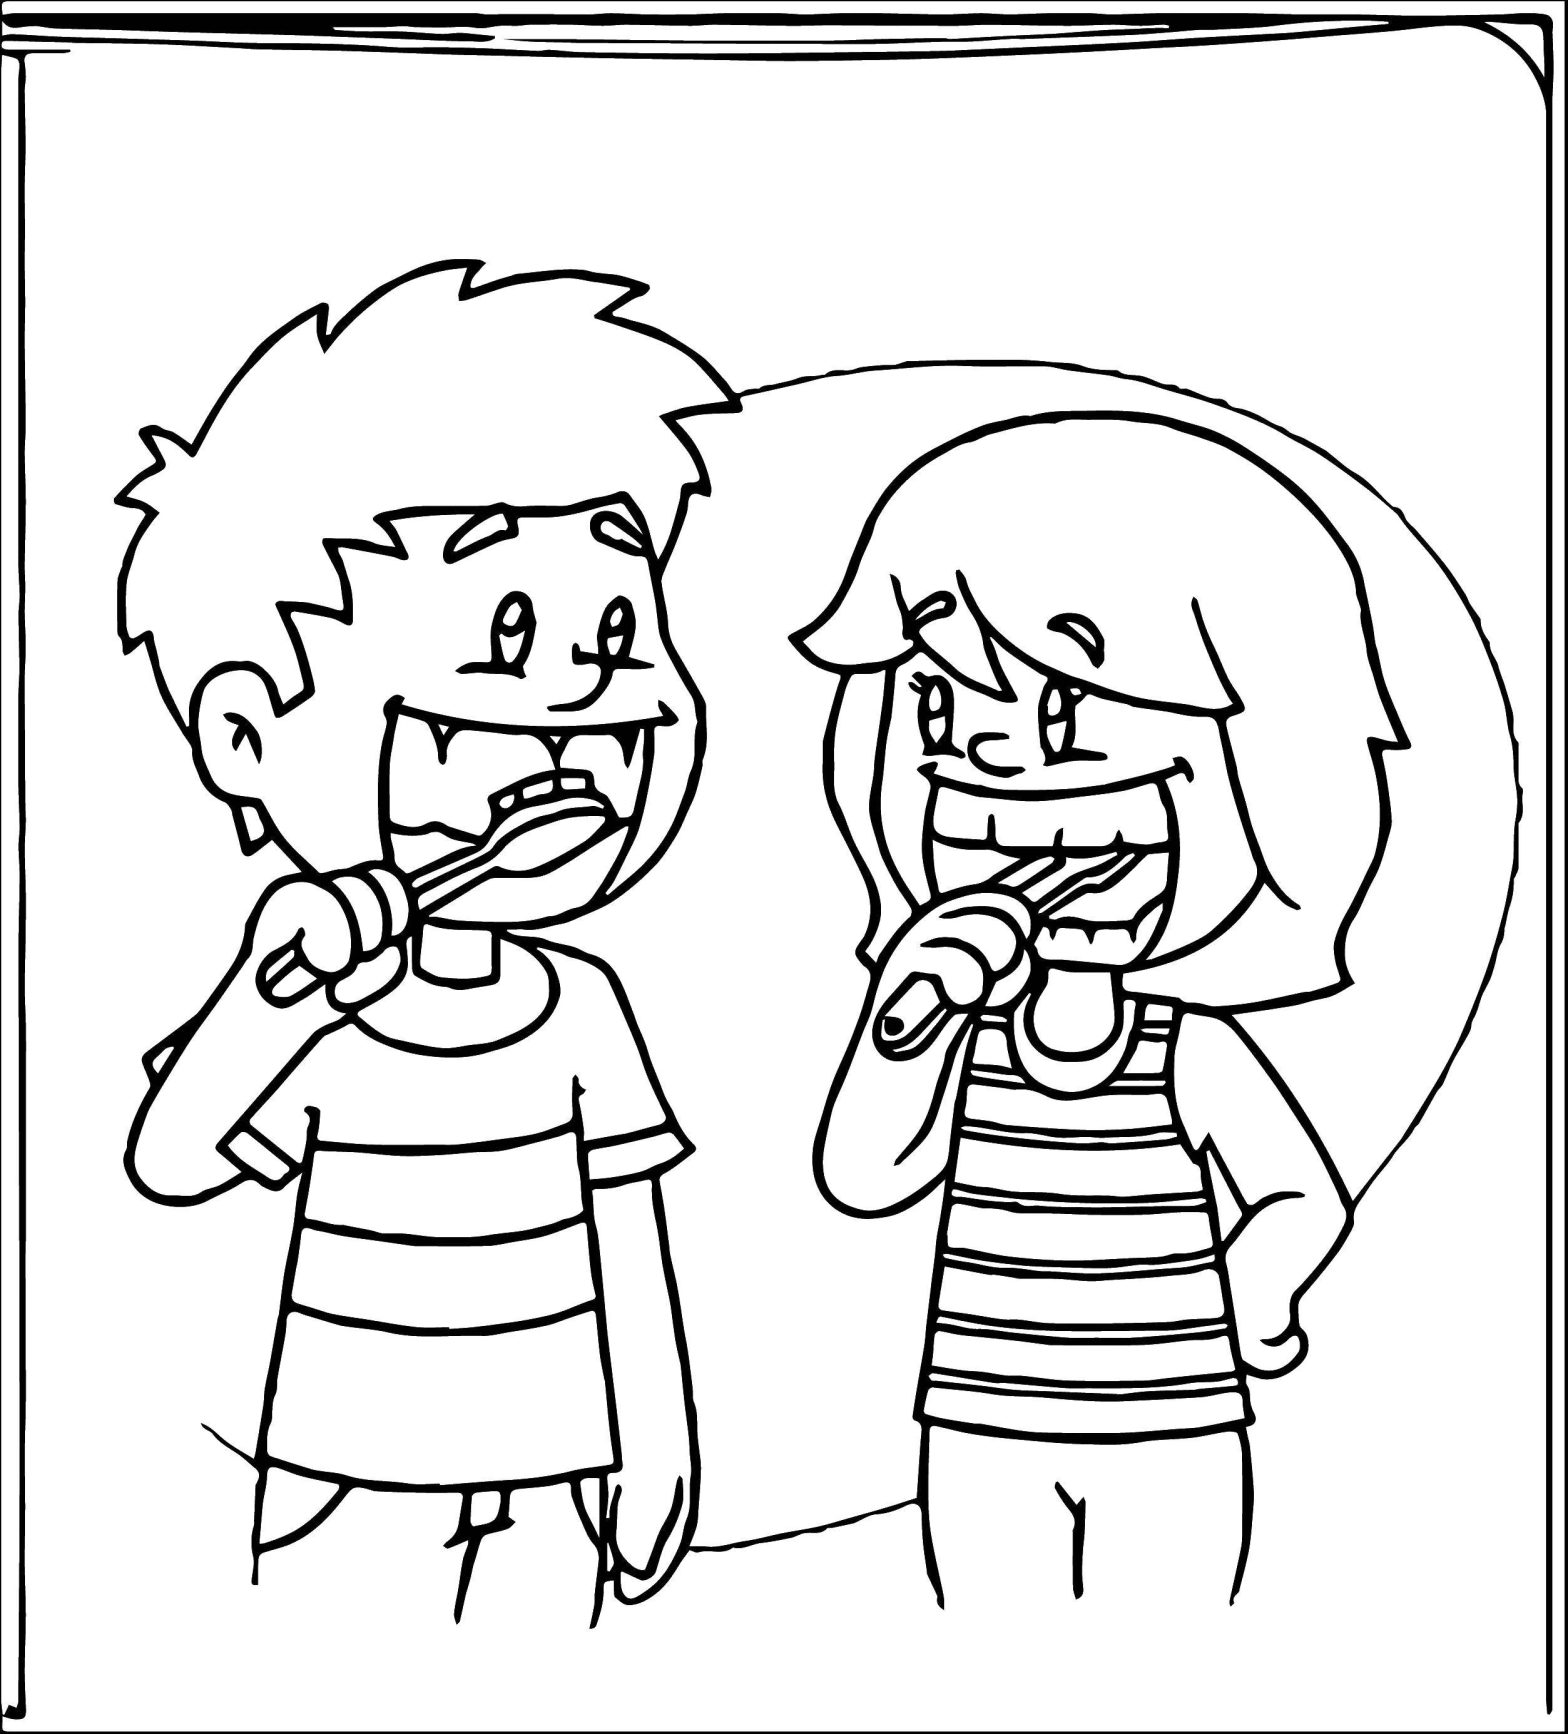 Иллюстрация к уходу за зубами (уход, зубы)